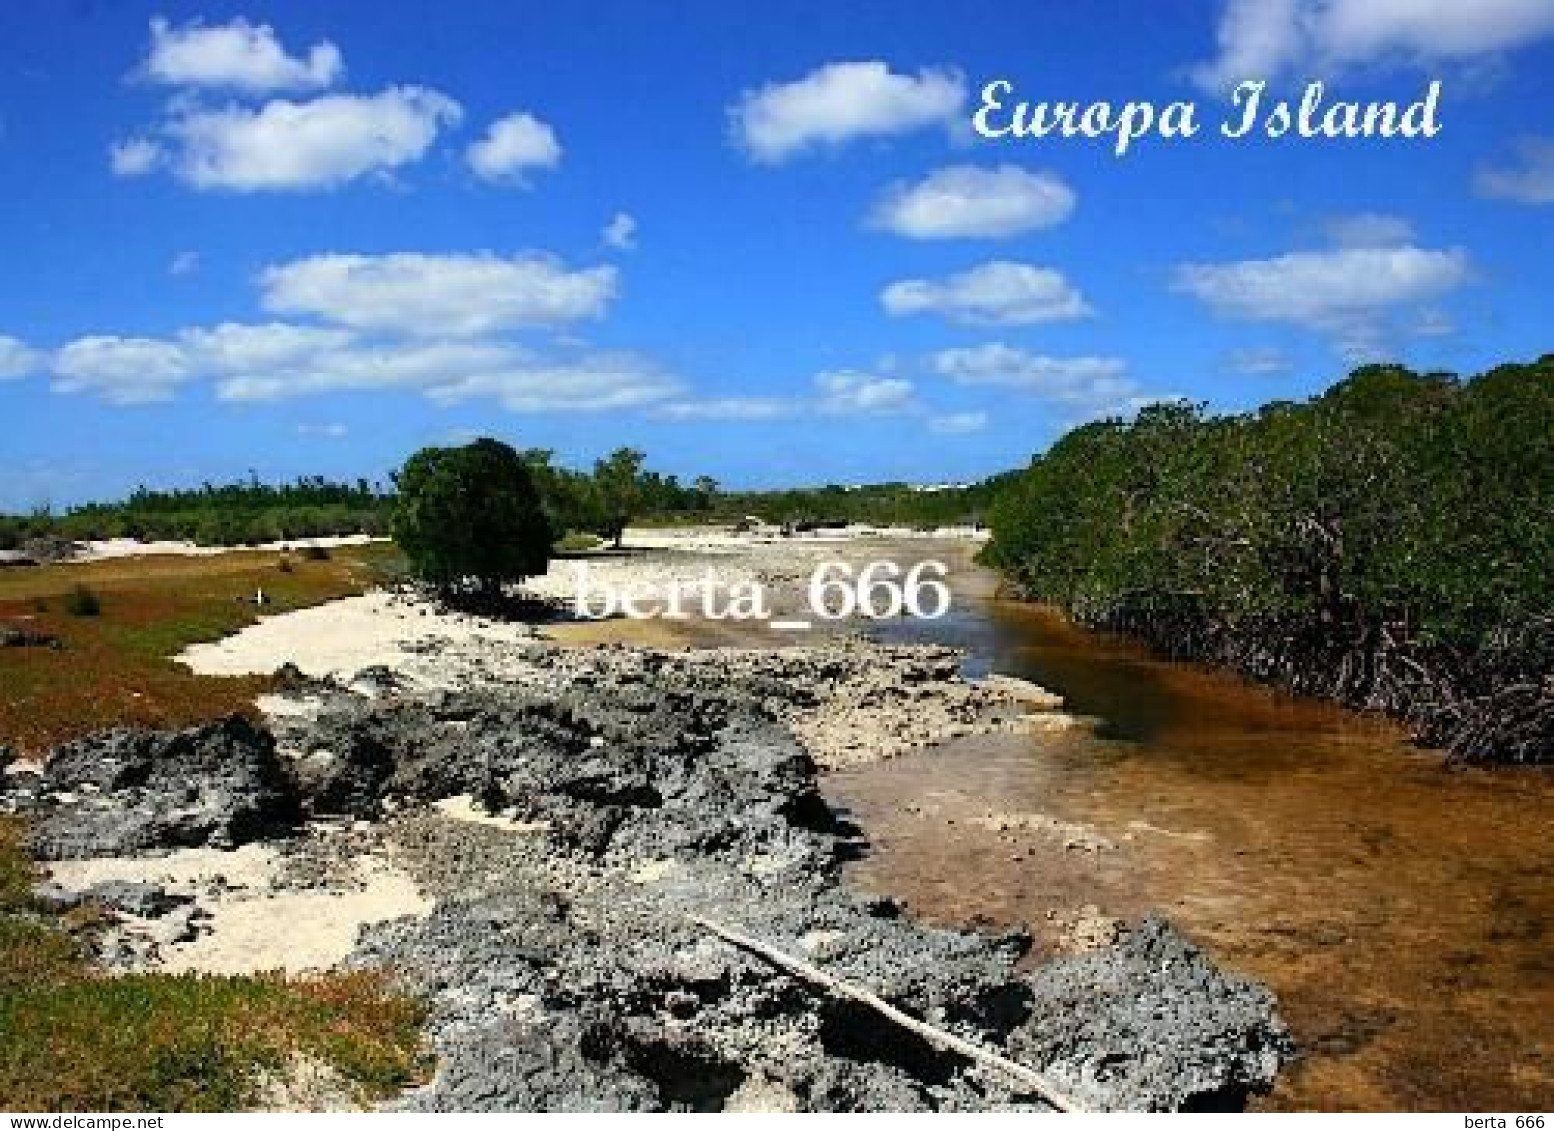 Scattered Islands Europa Island Iles Eparses New Postcard - TAAF : Franse Zuidpoolgewesten